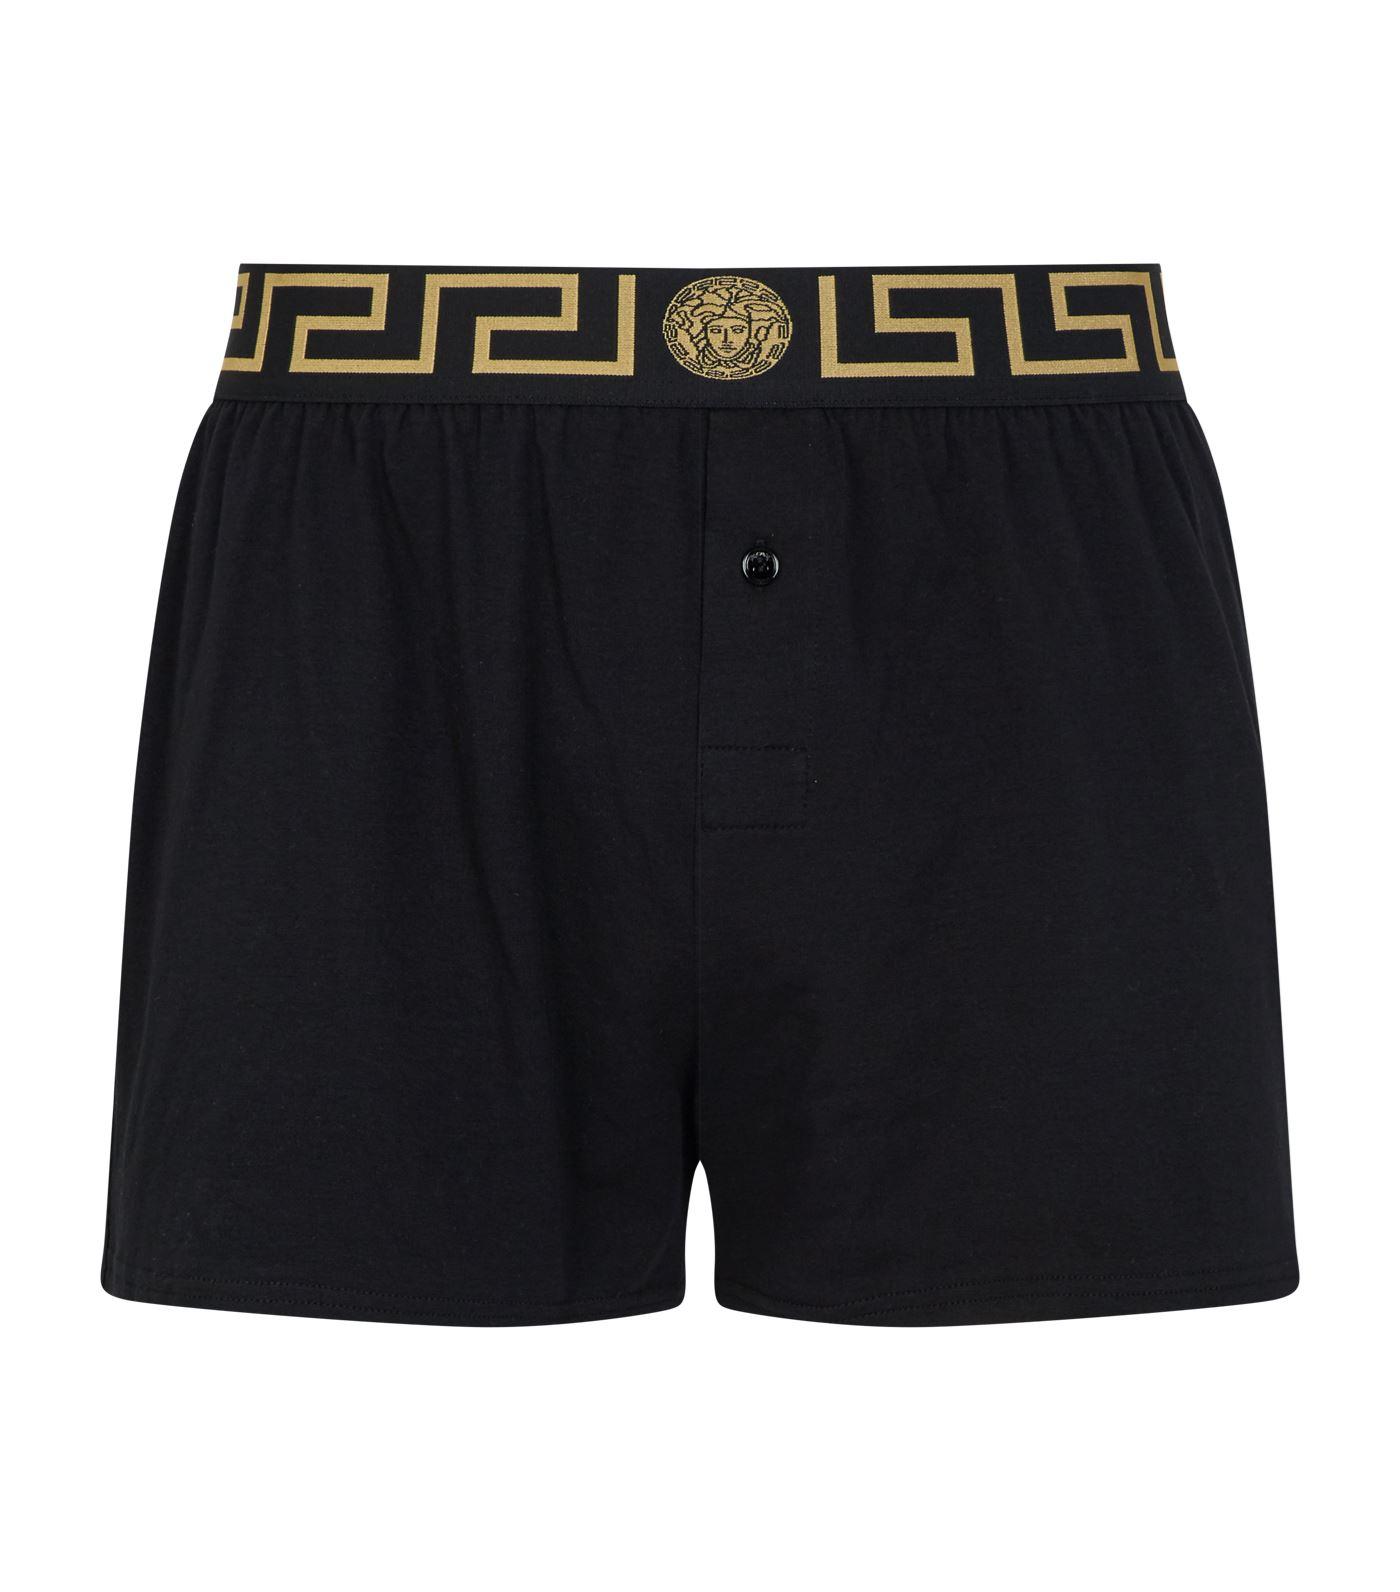 Versace Cotton Greca Logo Boxer Shorts in Black for Men - Lyst